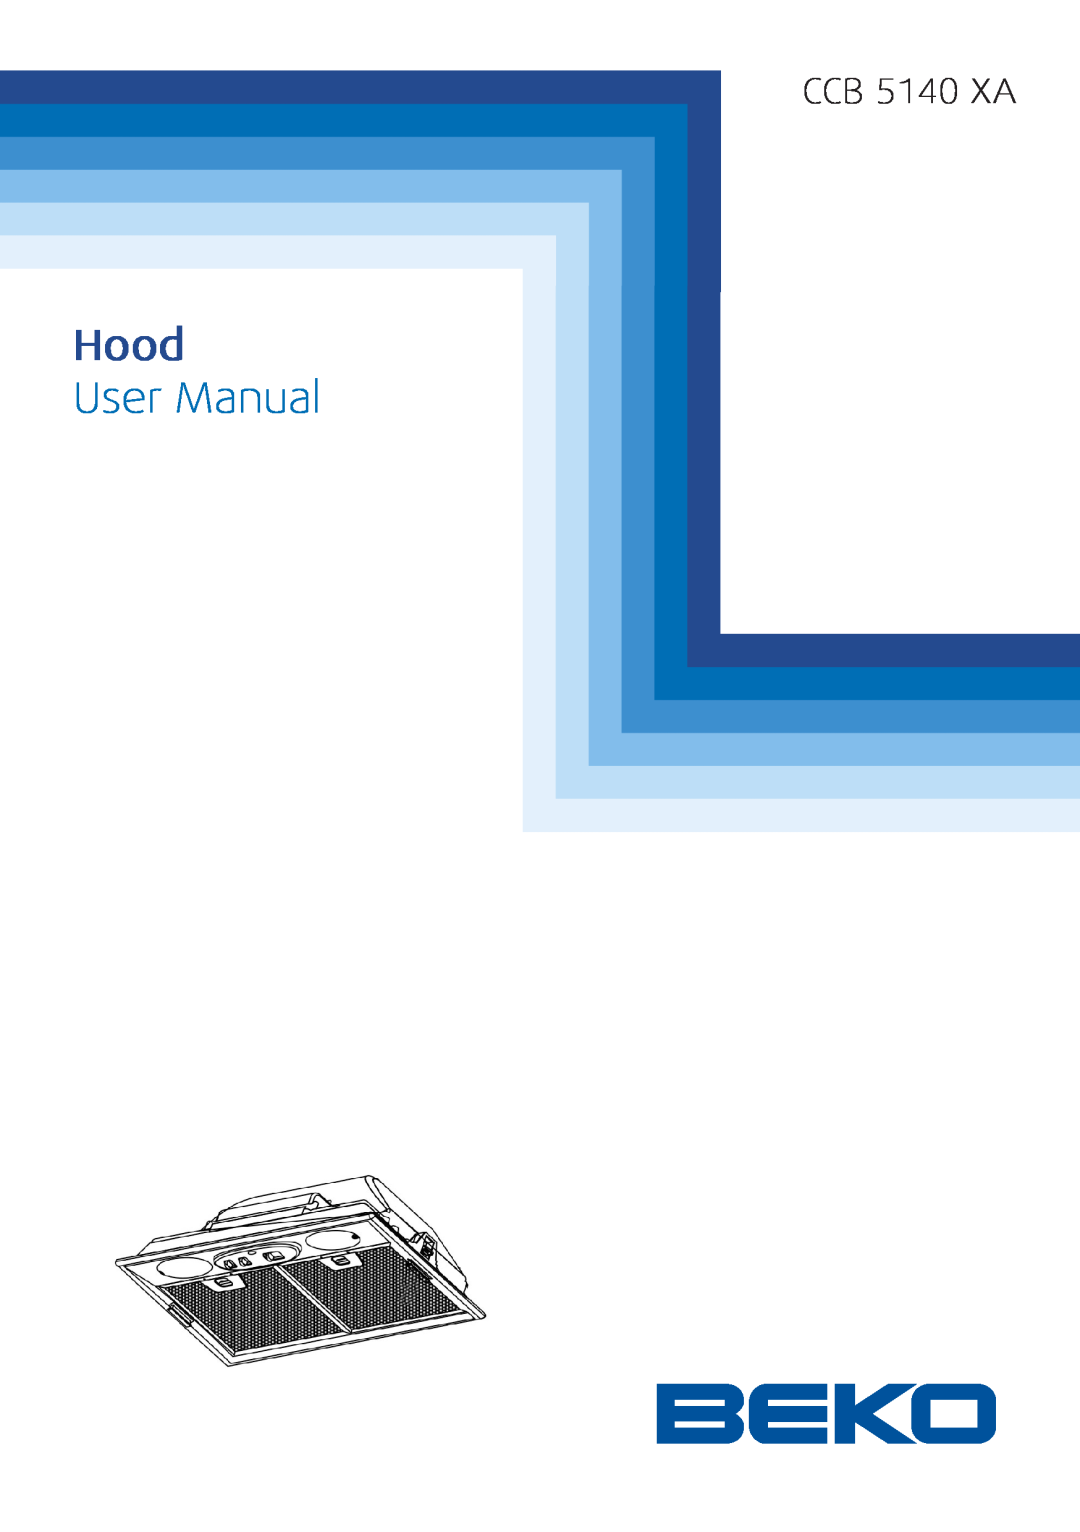 Beko CCB 5140 XA user manual Hood, User Manual 